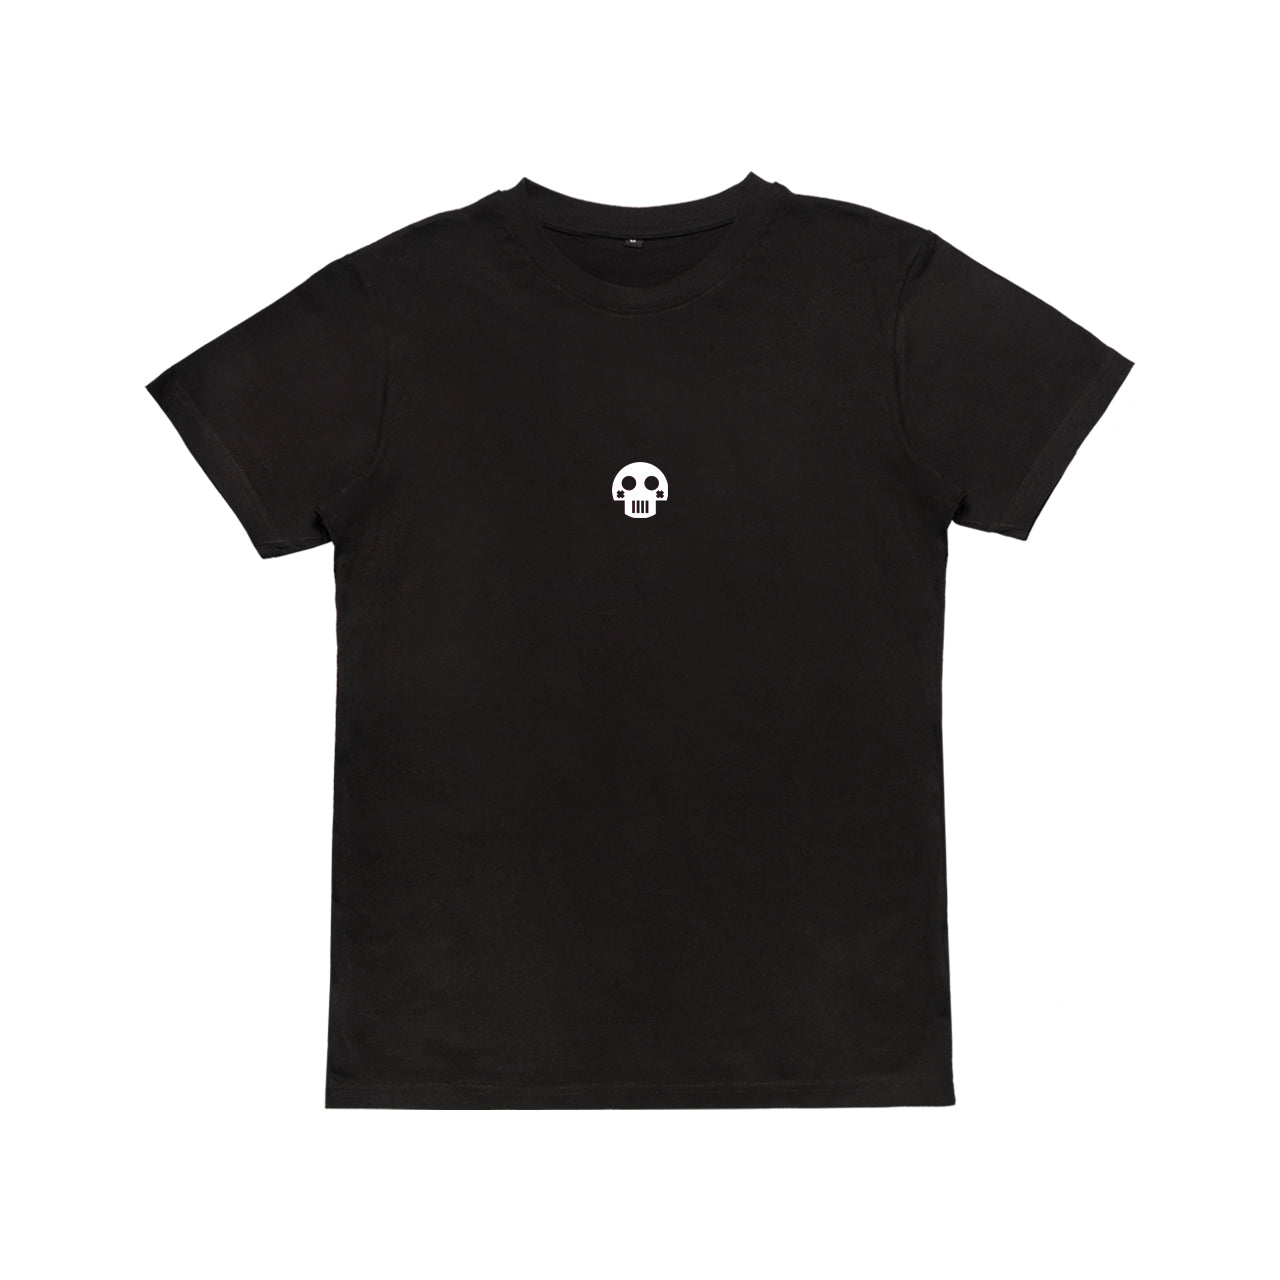 Blacklist - Skull T-Shirt Basic 2020